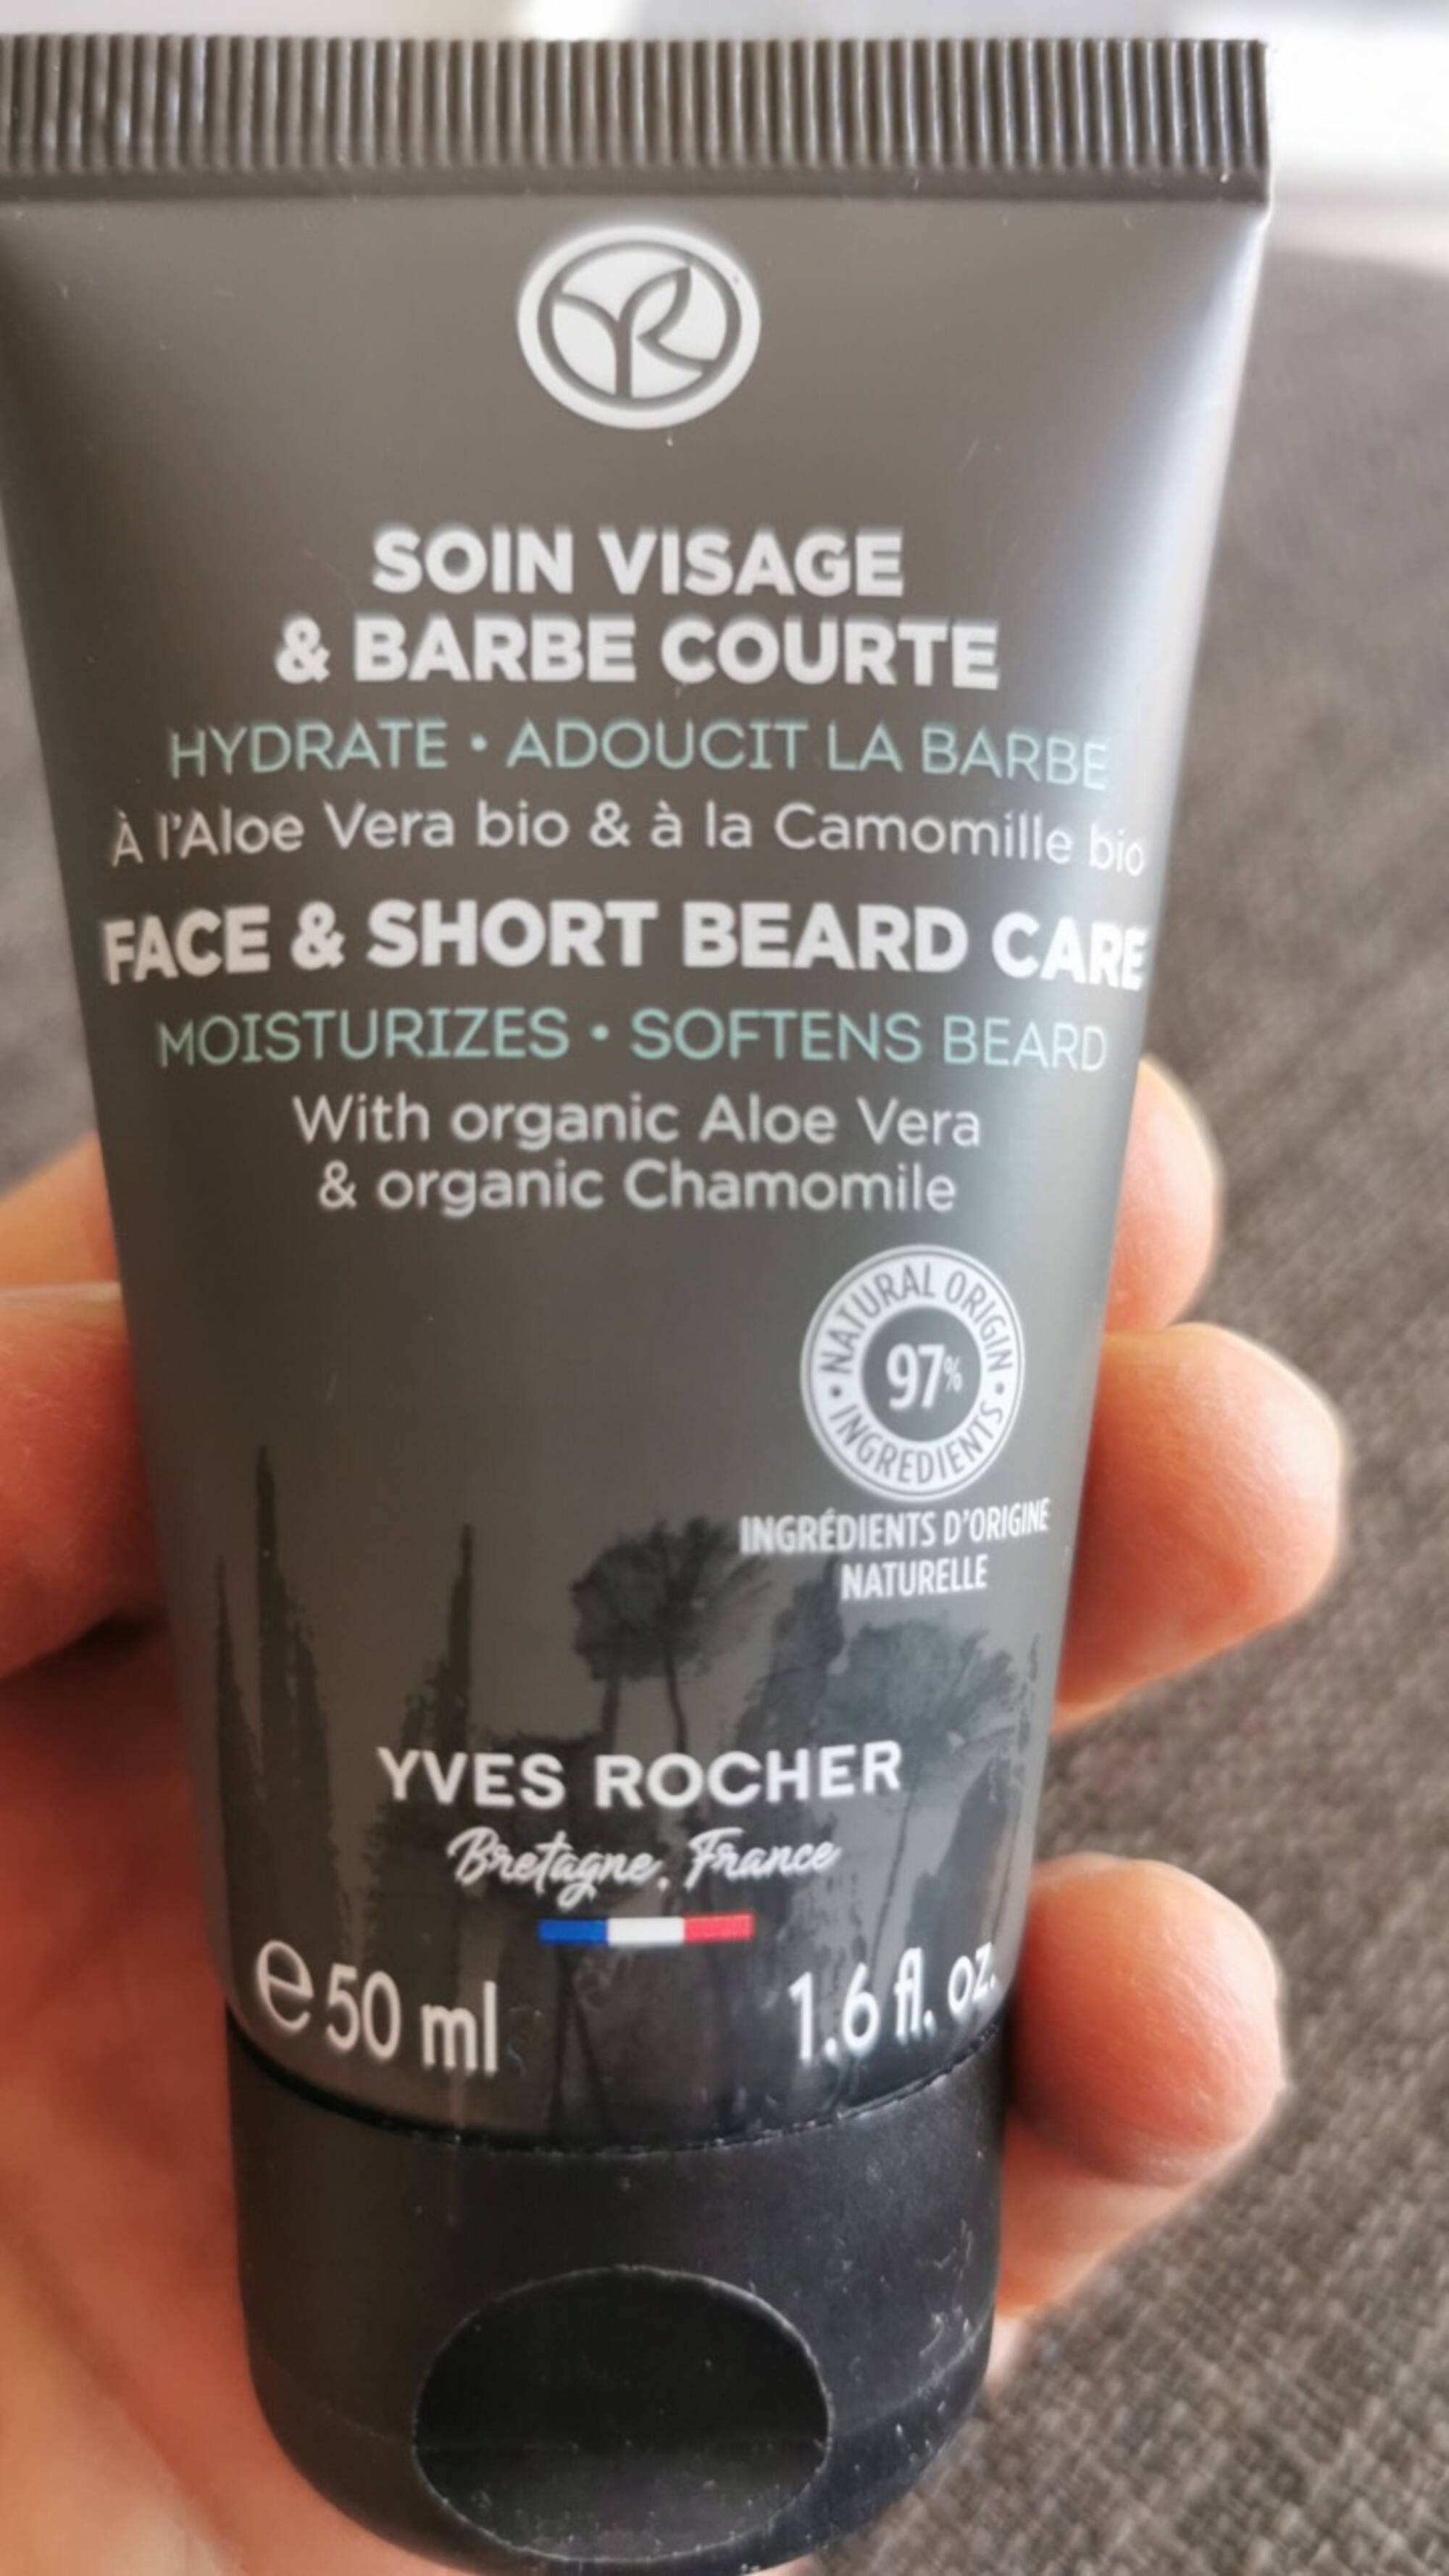 YVES ROCHER - Soin visage et barbe courte 